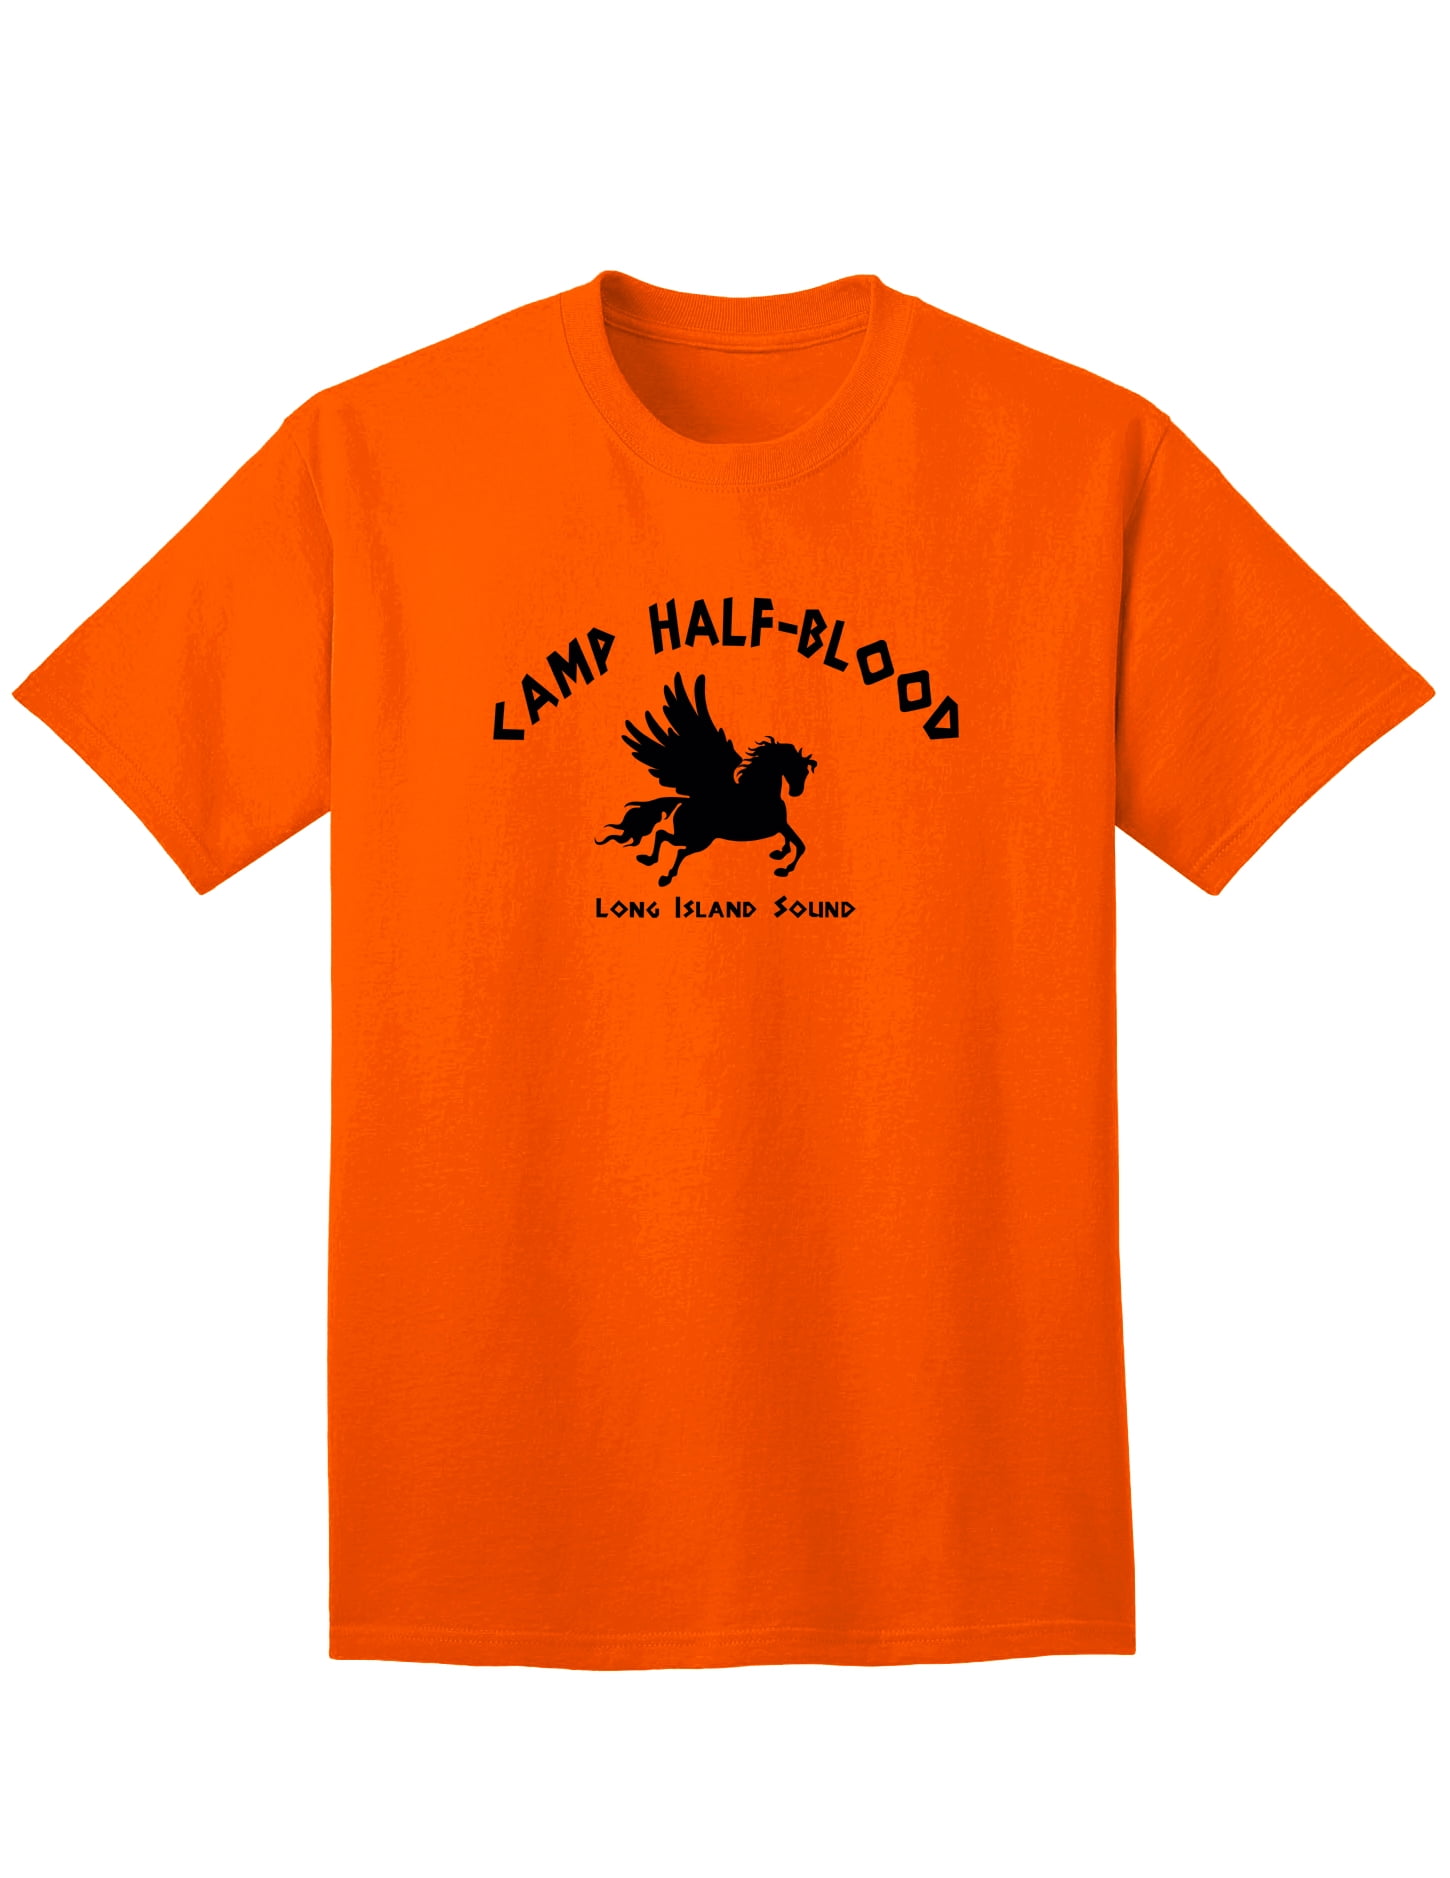 White Camp Half Blood Youth's T-Shirt Cool Demigods Long Island Shirts 